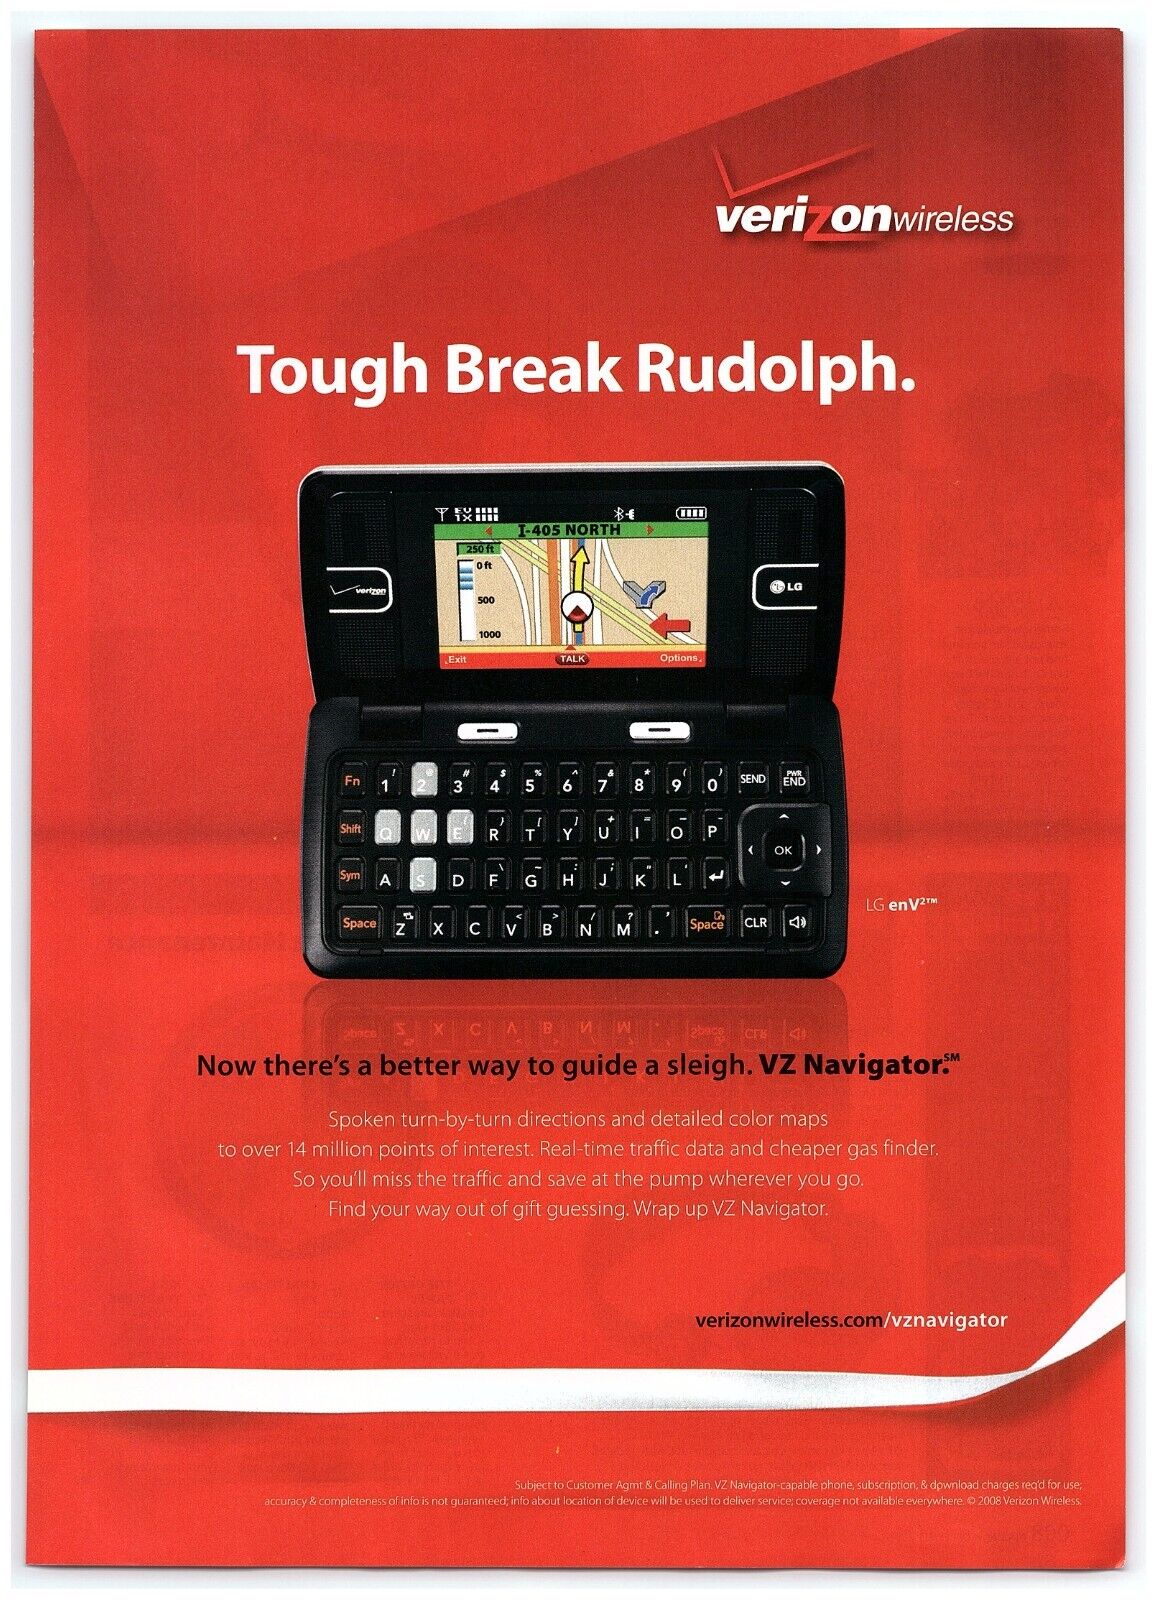 2008 Verizon Wireless Print Ad, LG enV2 Phone Tough Break Rudolph VZ Navigator